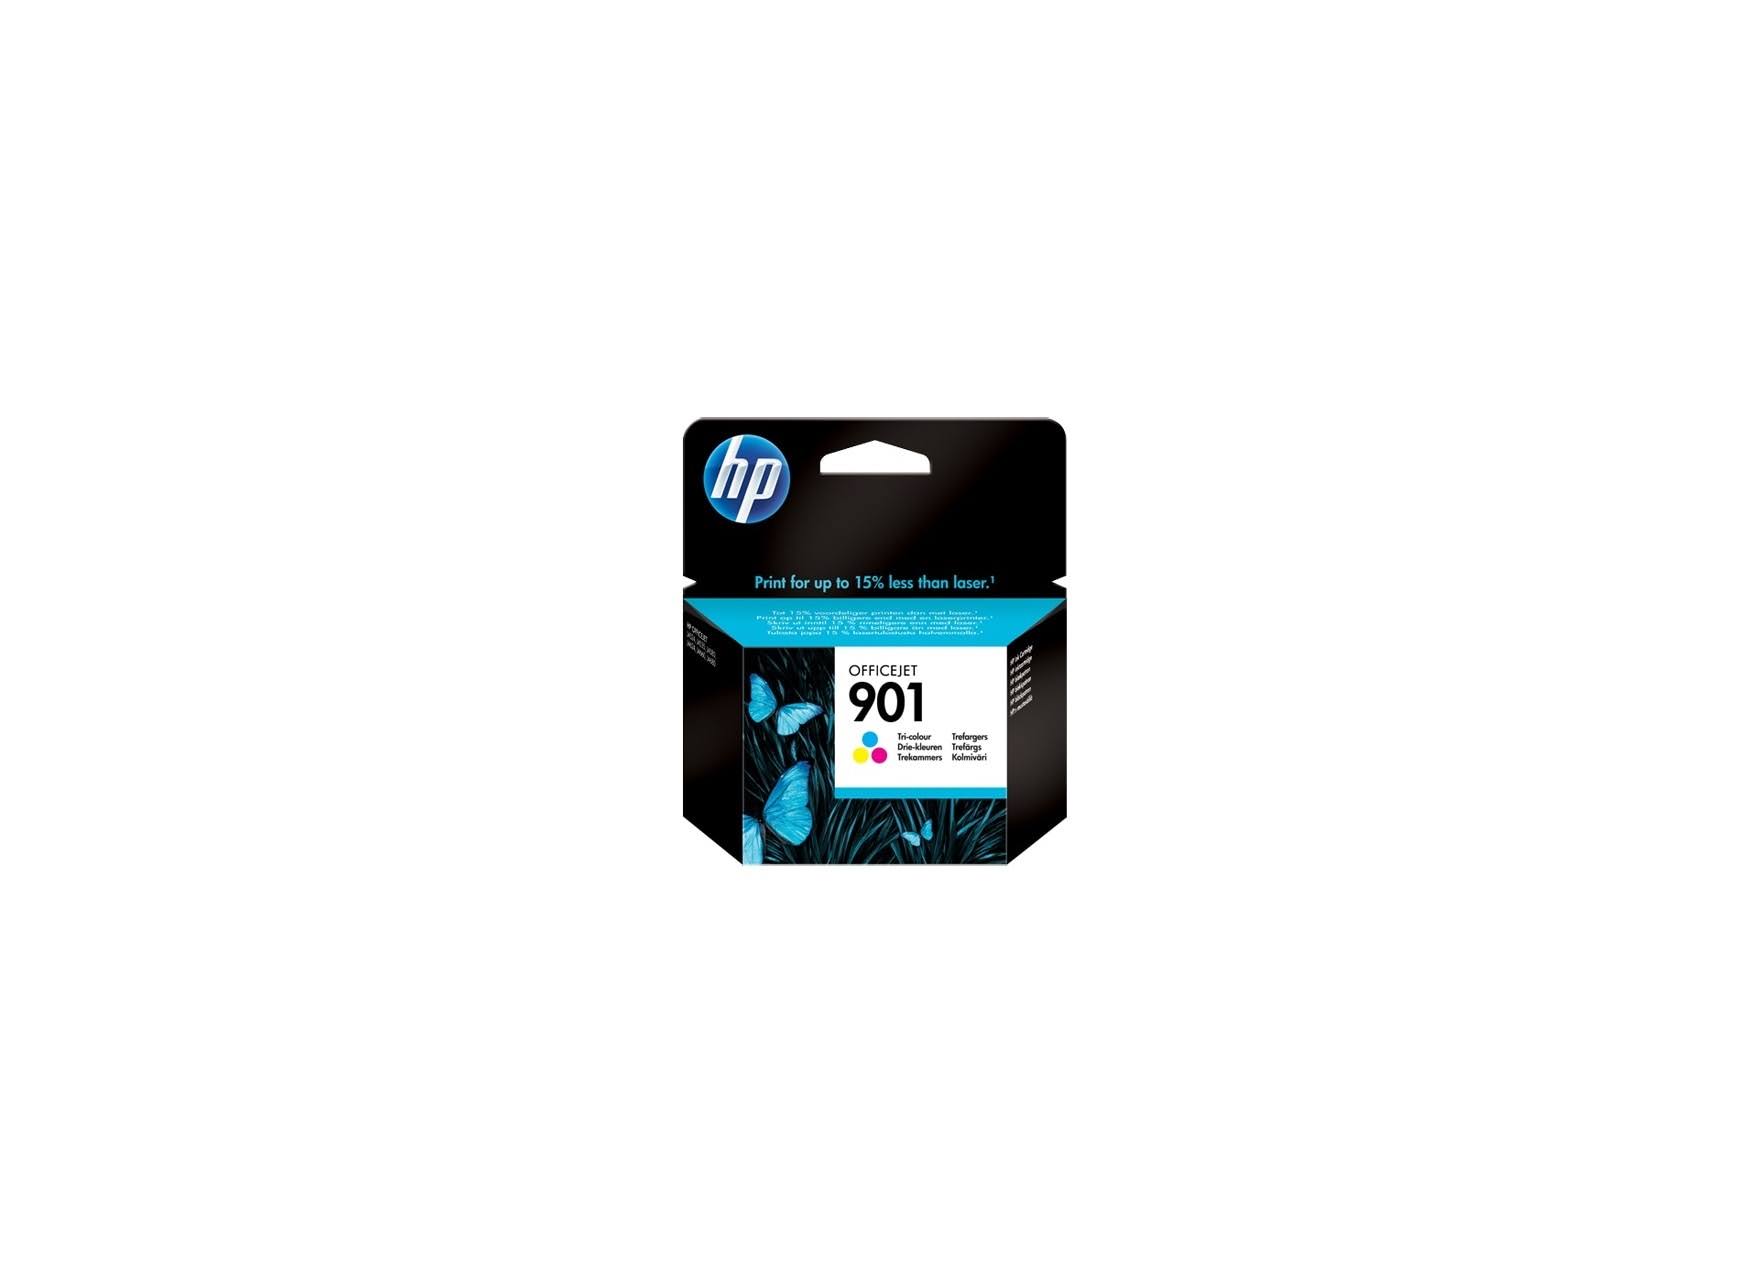 HP Officejet 901 Tricolour Ink Cartridge